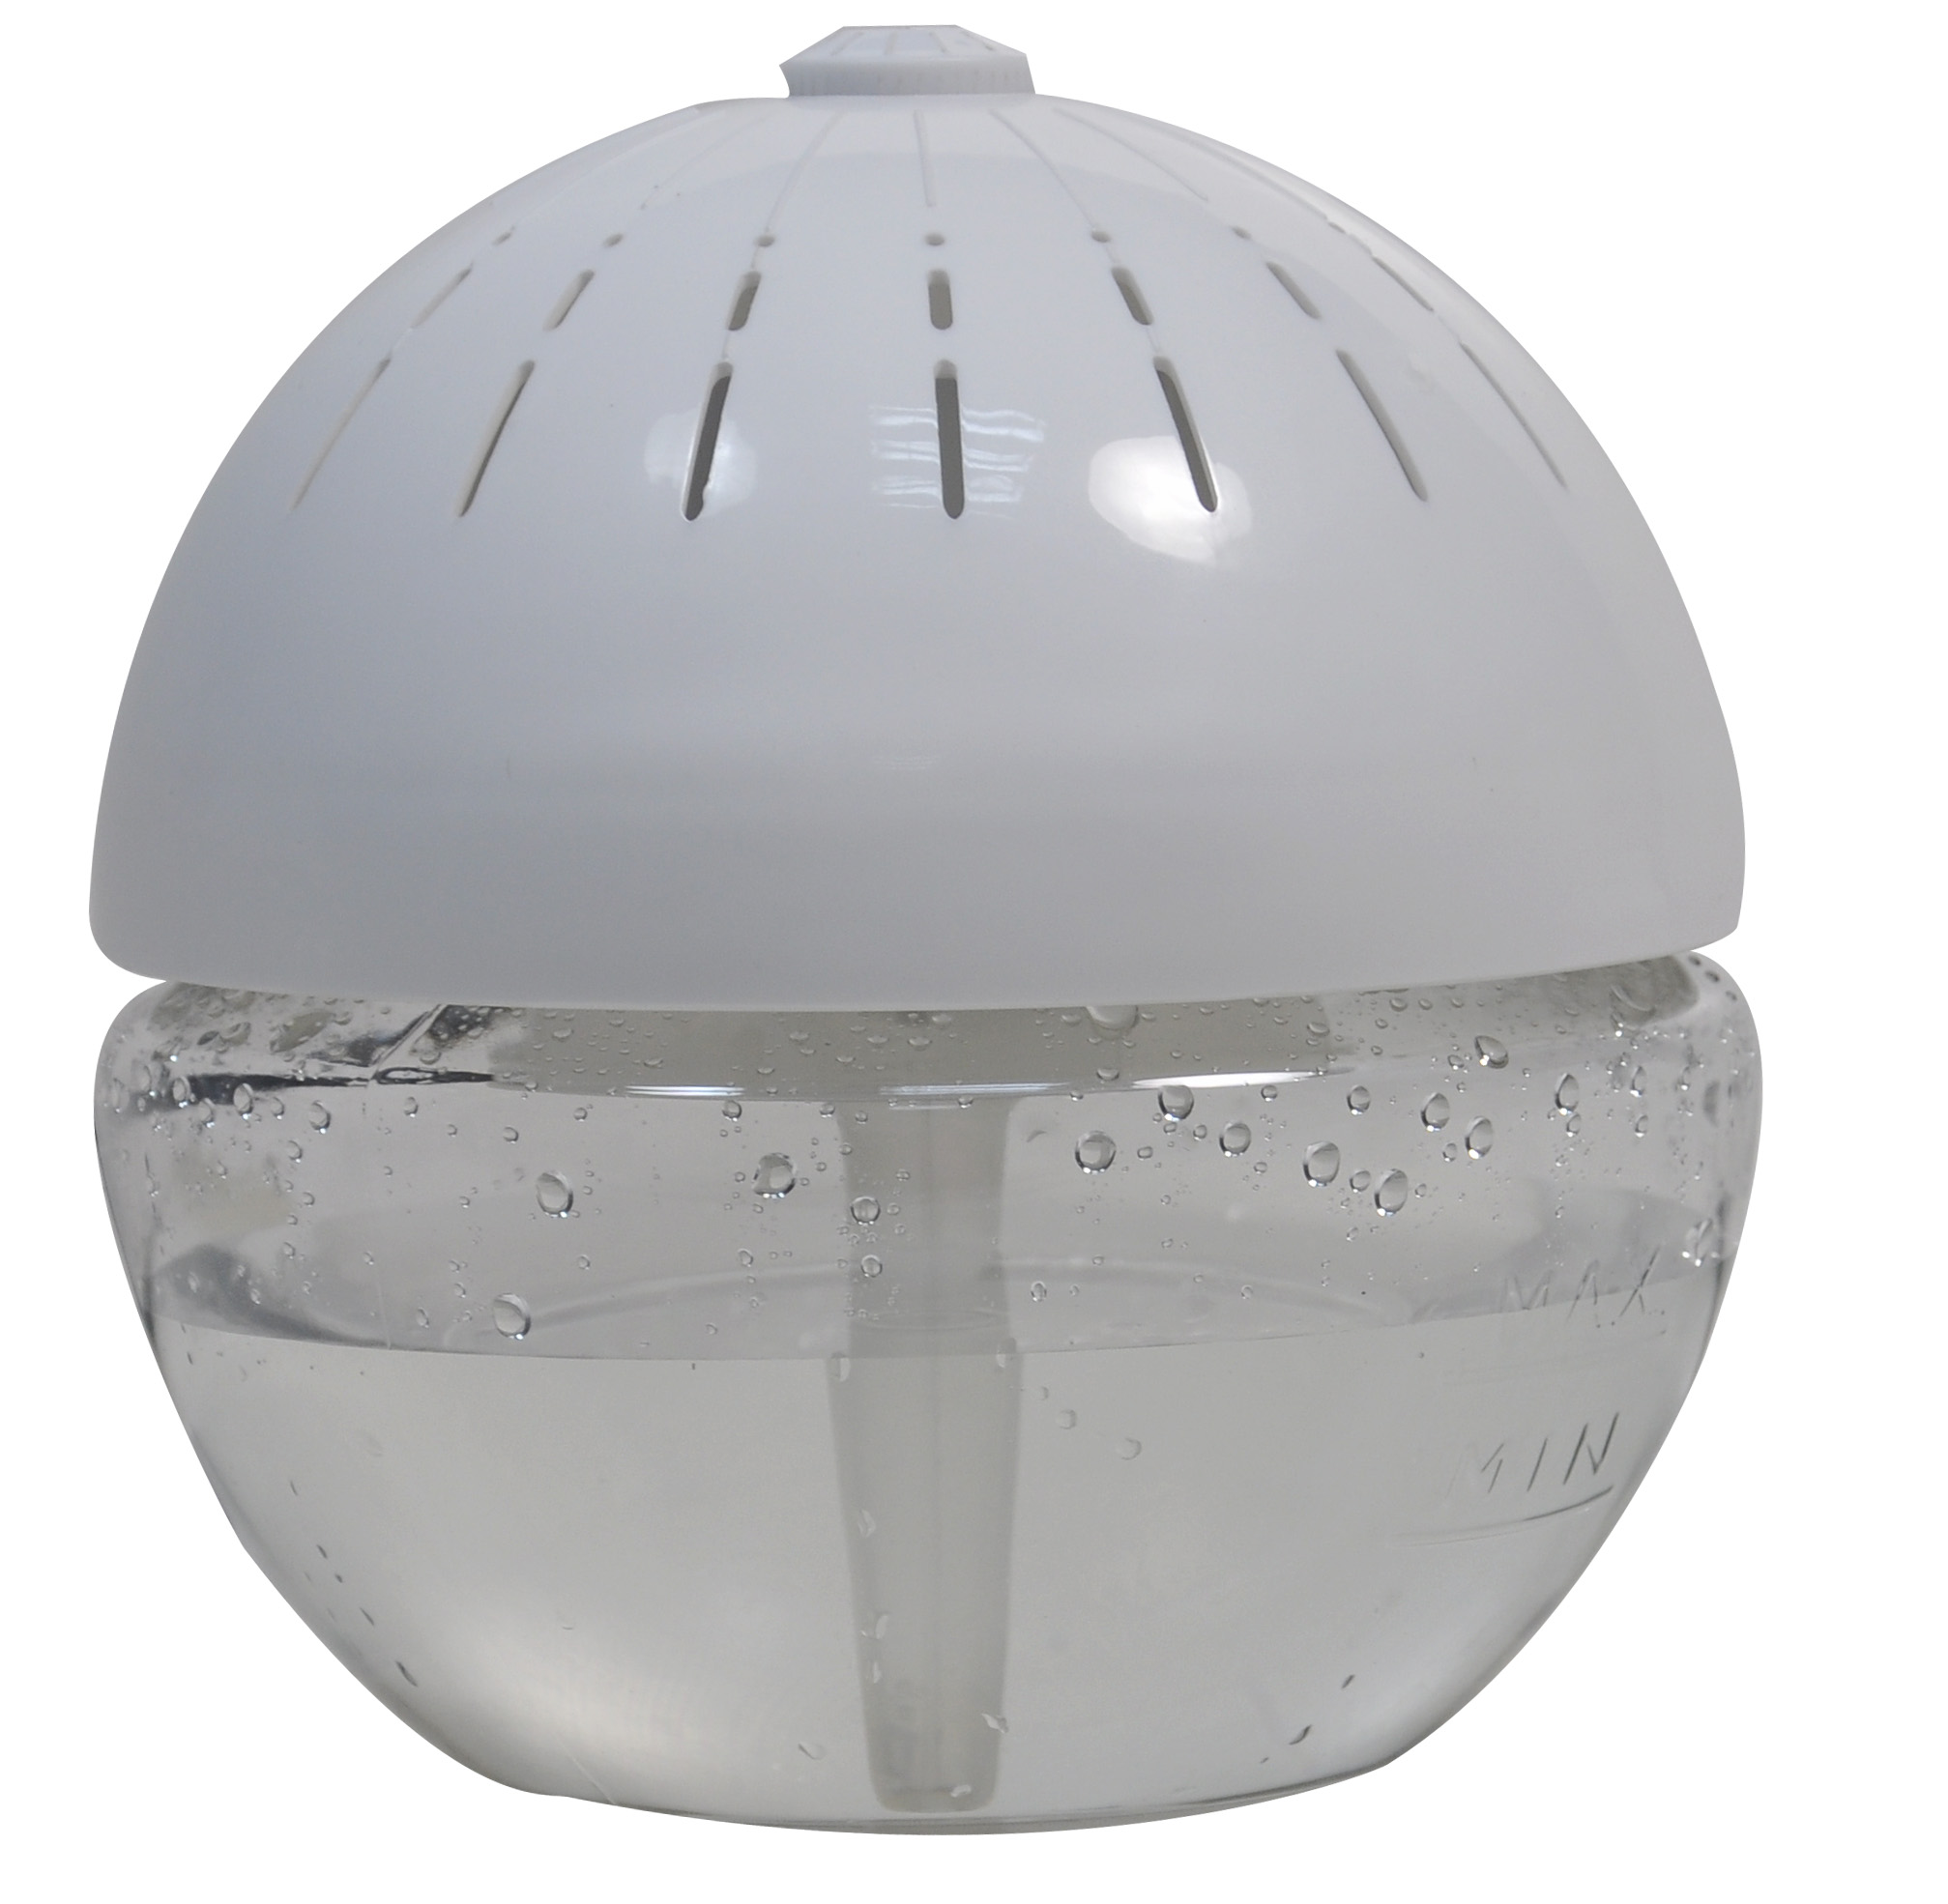 Ball Round Water Air Revitalisor,Round Water Air Freshener,Round Water Washing Air Purifier